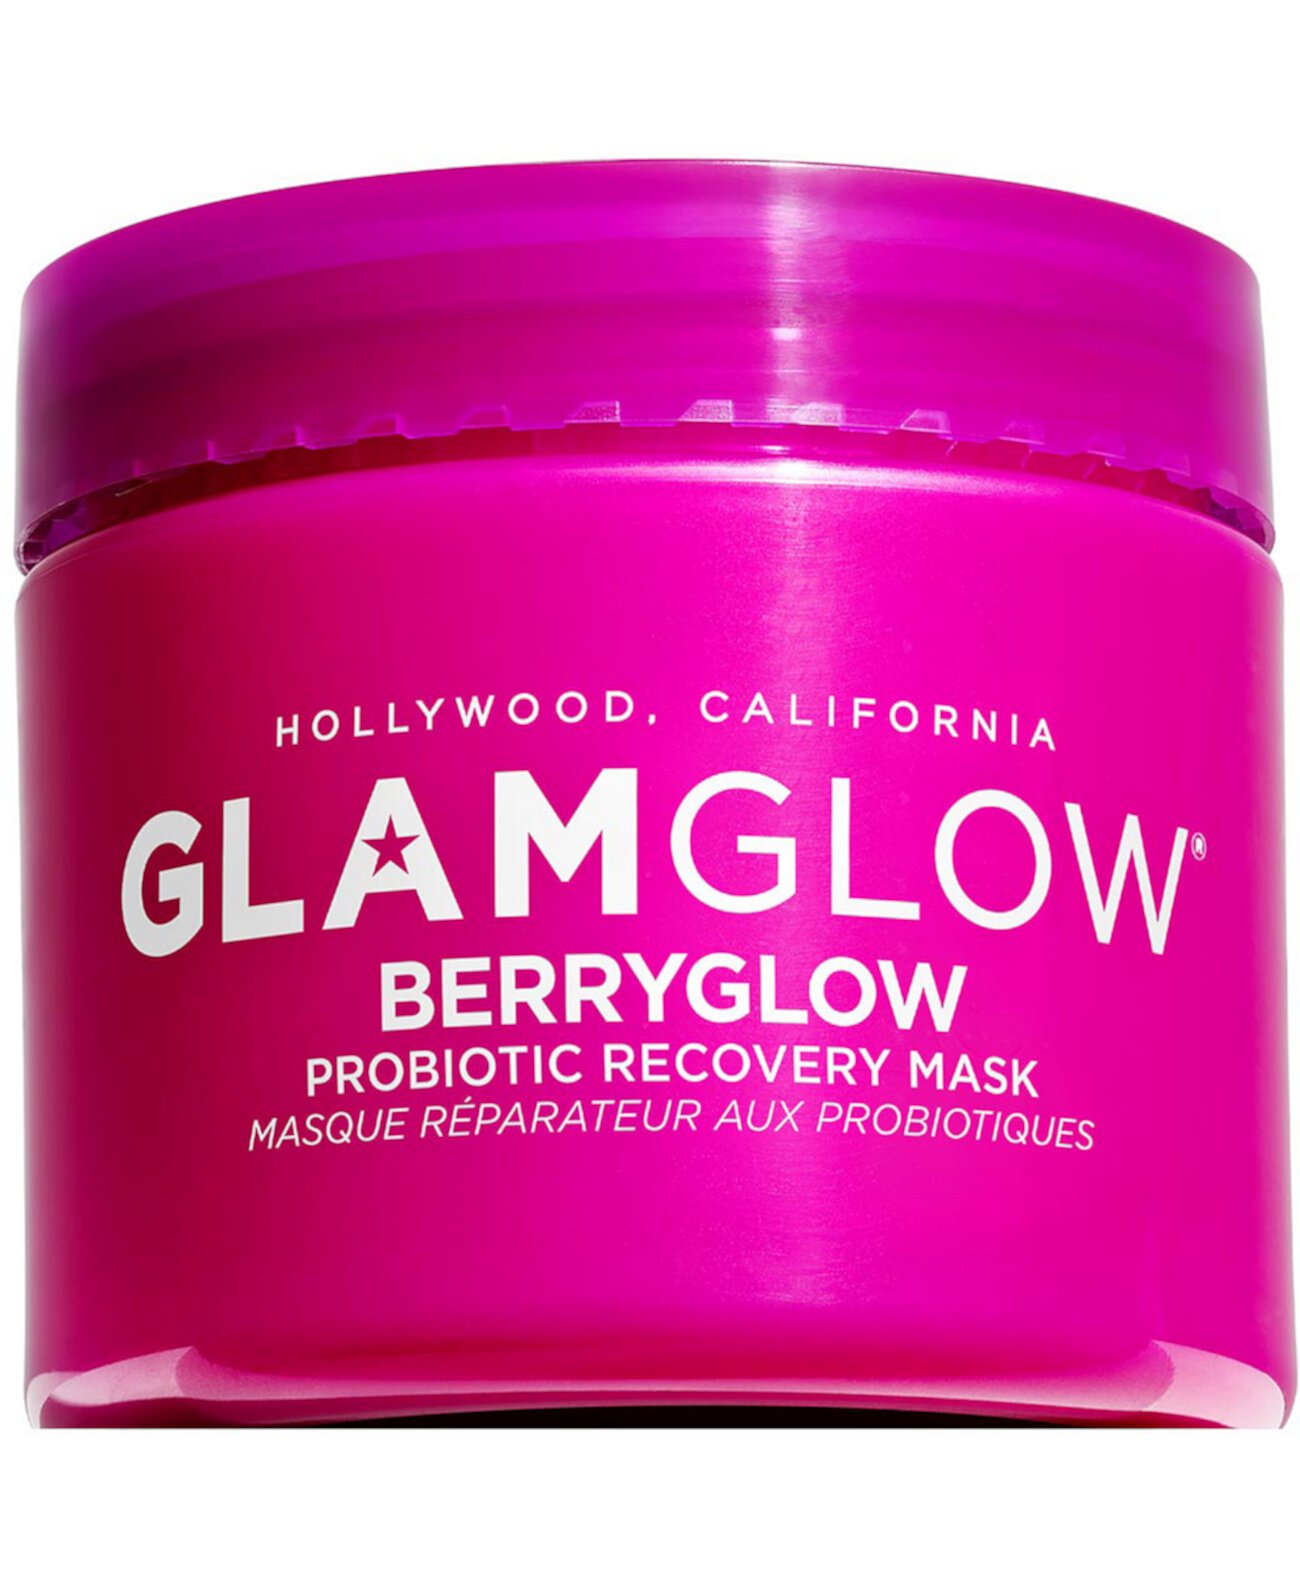 Восстанавливающая маска с пробиотиками Berryglow, 2,5 унции. GLAMGLOW